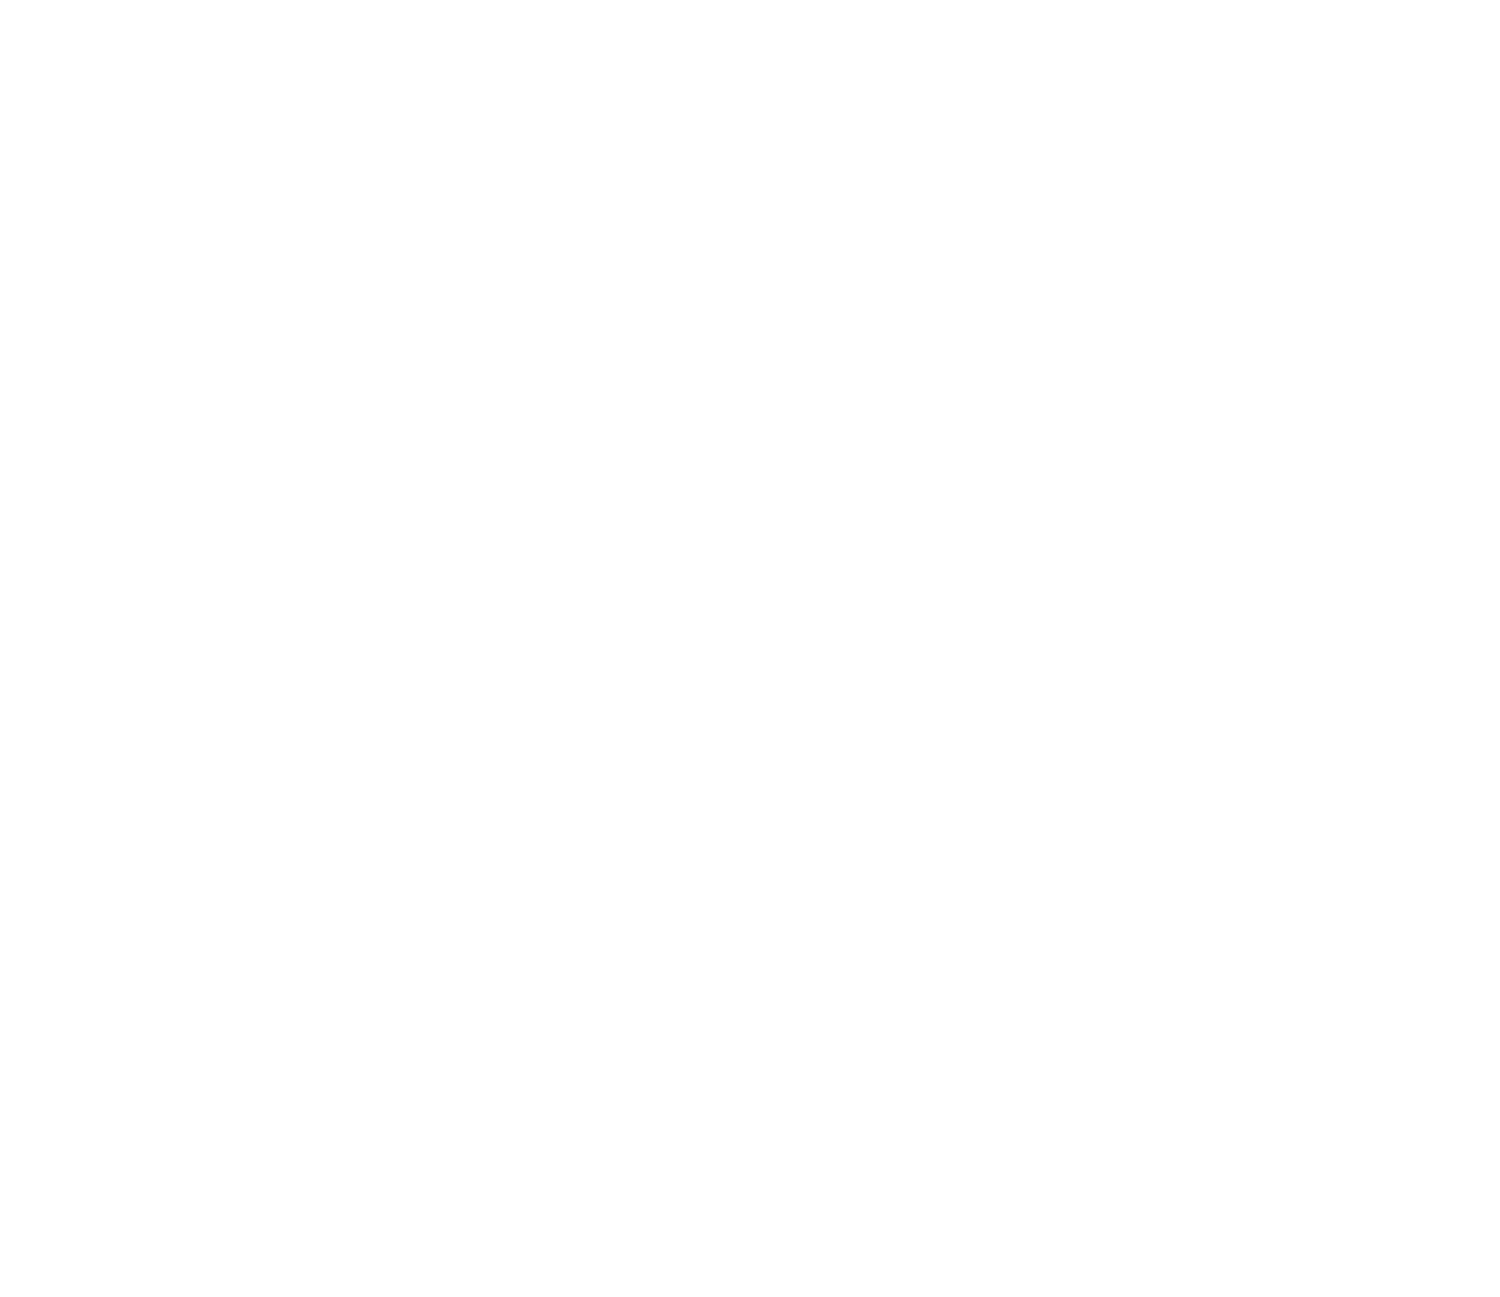 White Oak Bicycle Co-op